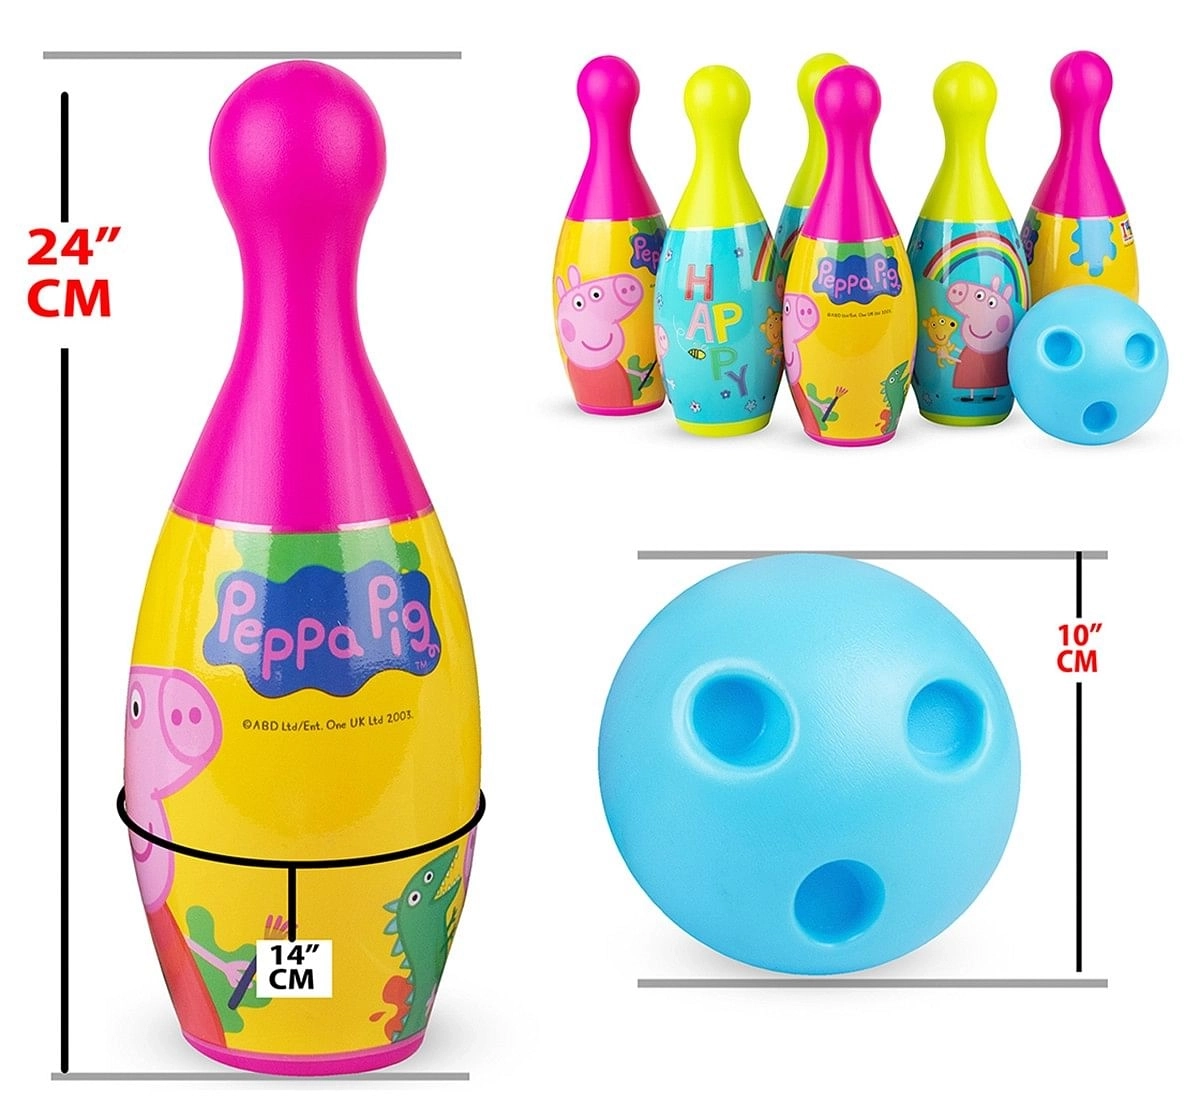 IToys Peppa pig bowling set for kids,  3Y+(Multicolour)